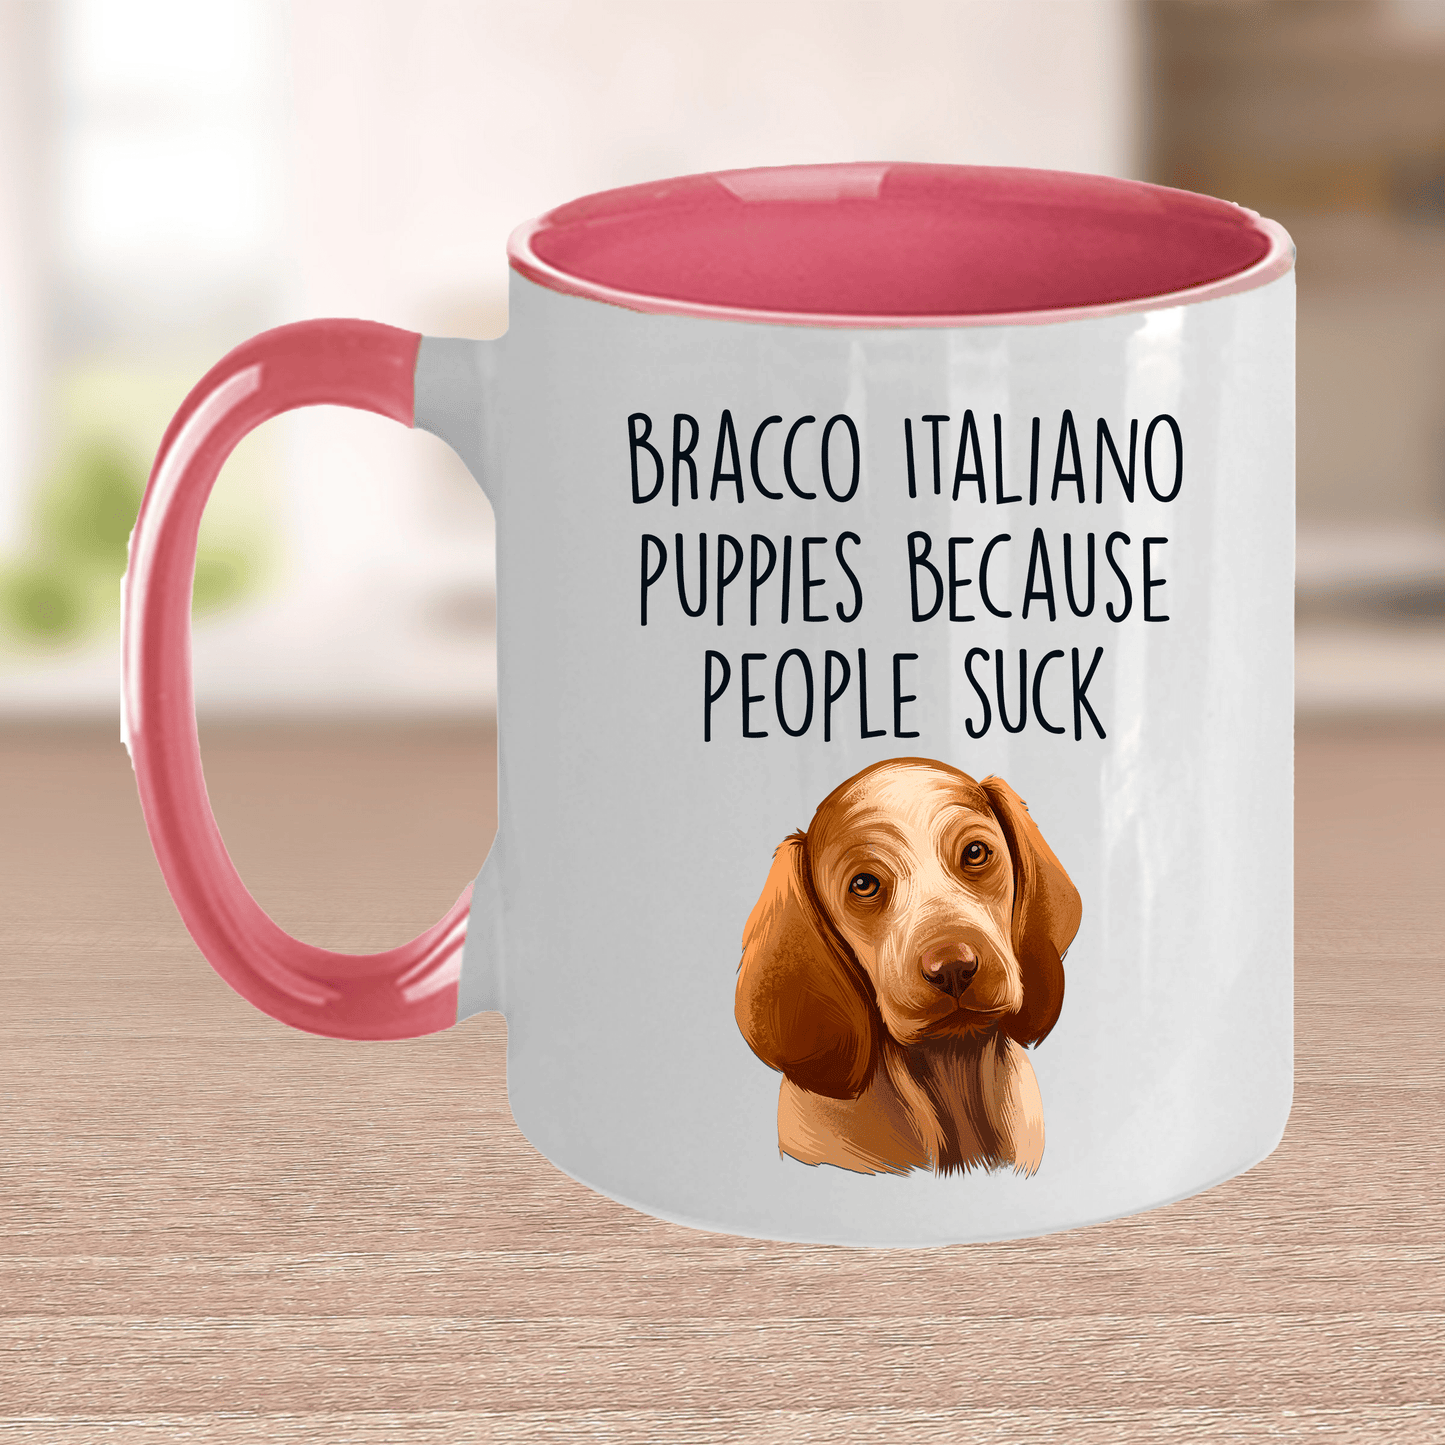 Bracco Italiano Puppies Because People Suck Funny Dog Ceramic Coffee Mug